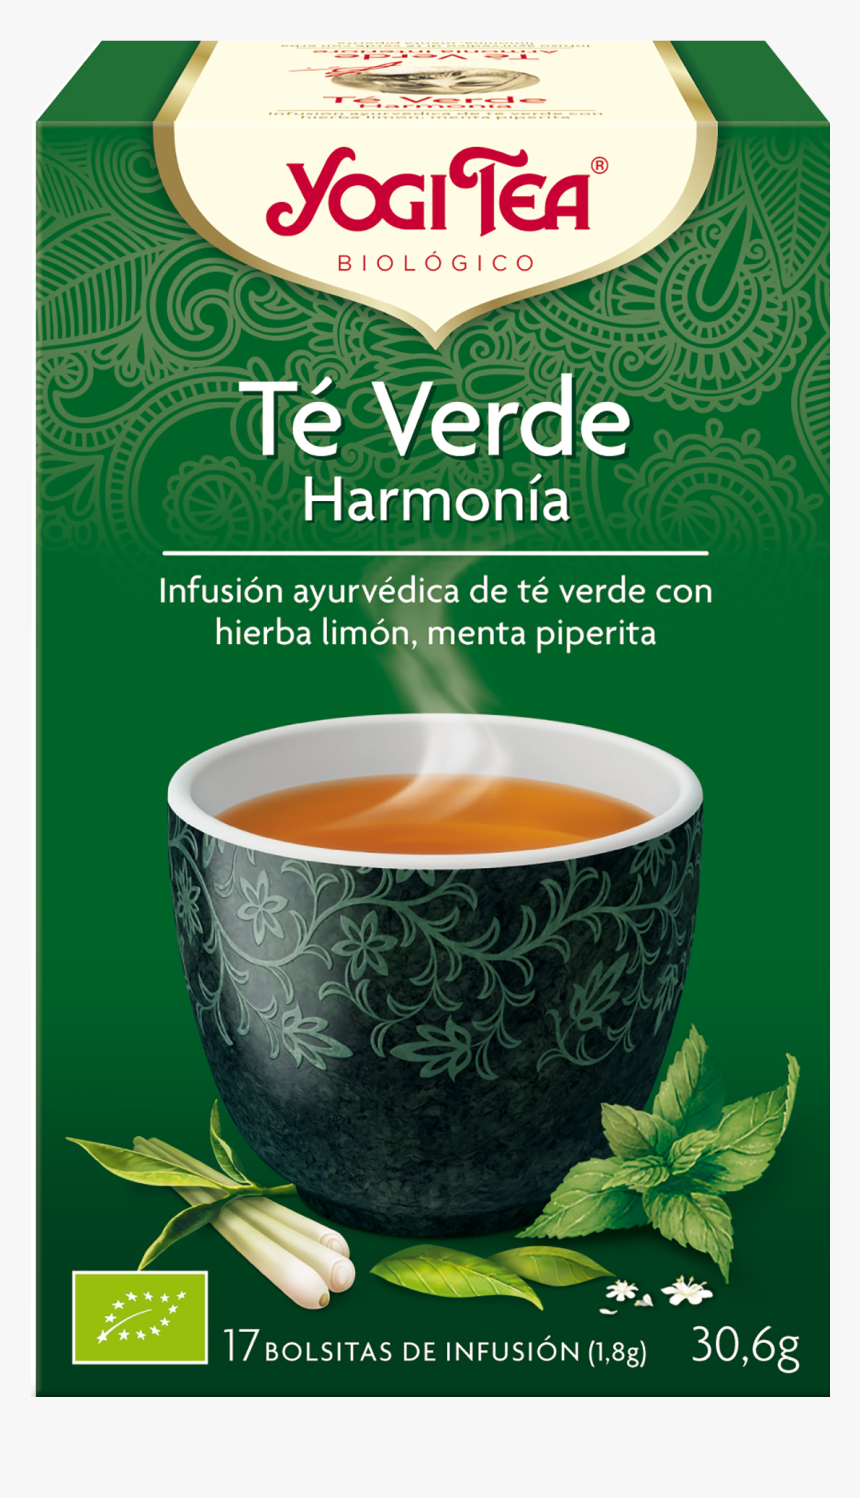 Yogi Tea, HD Png Download, Free Download